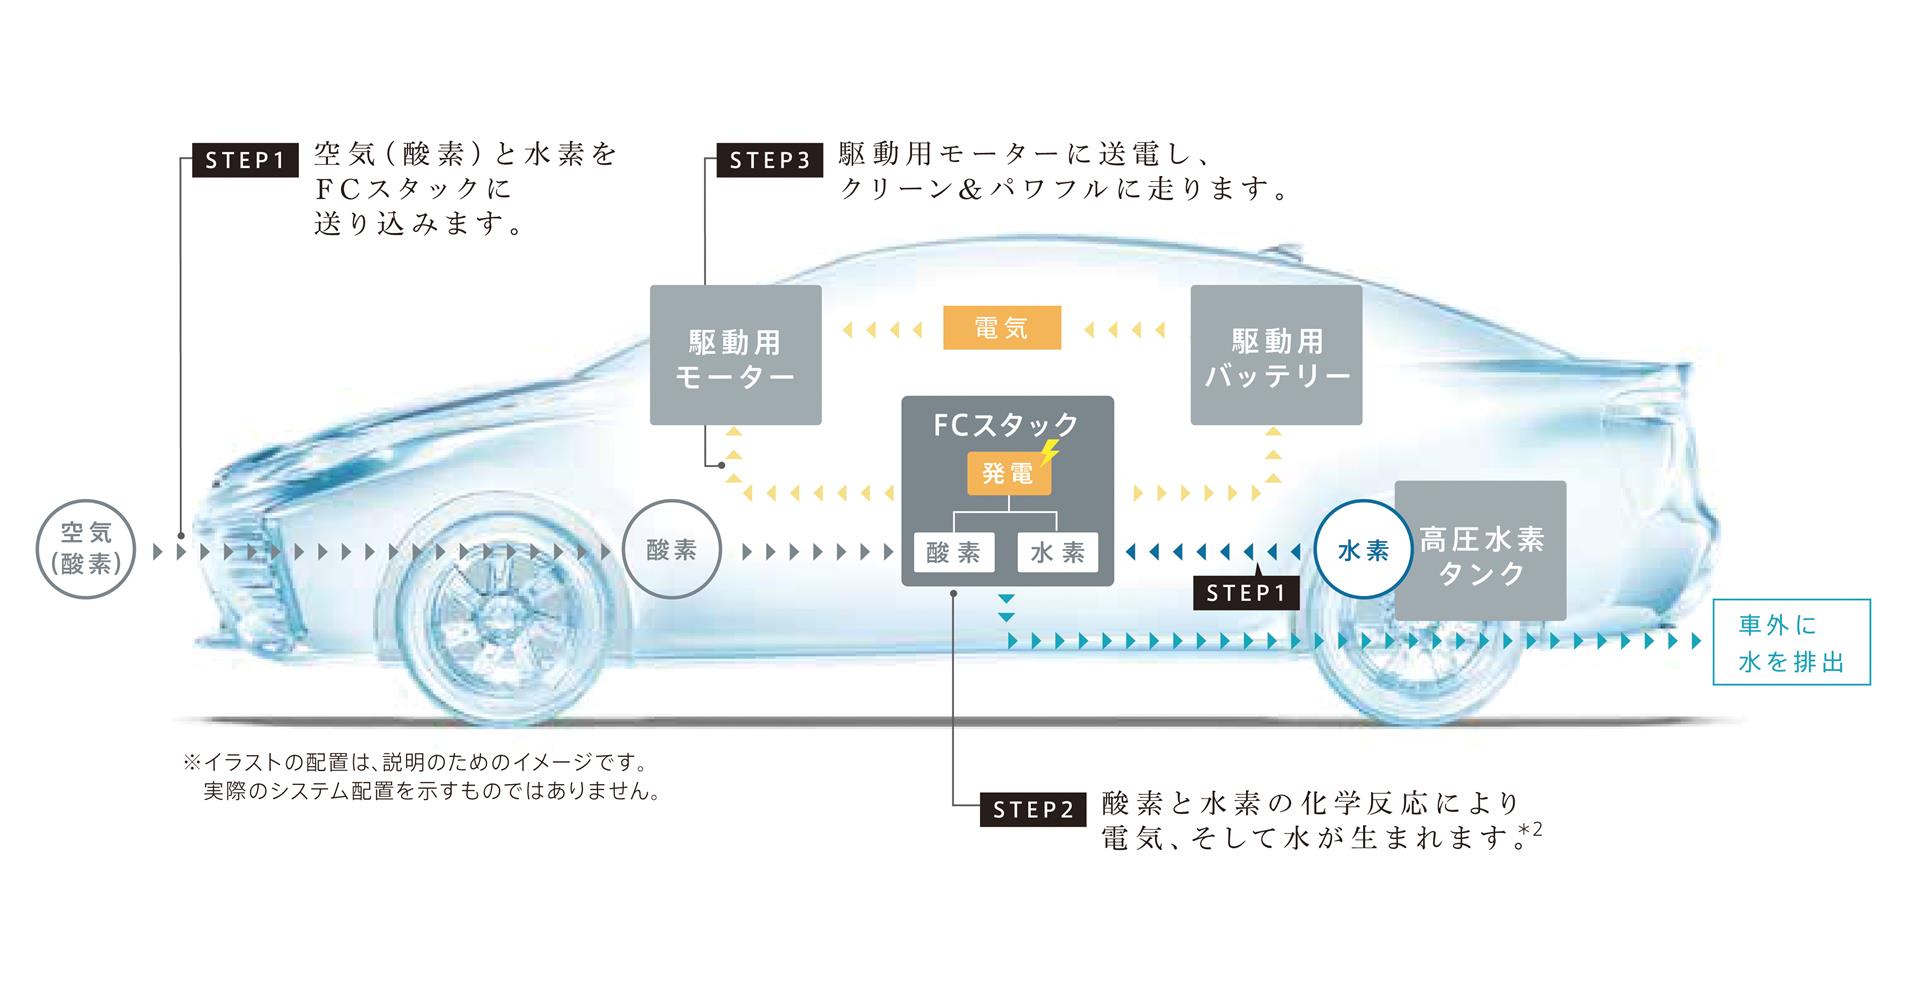 燃料電池自動車イメージ図